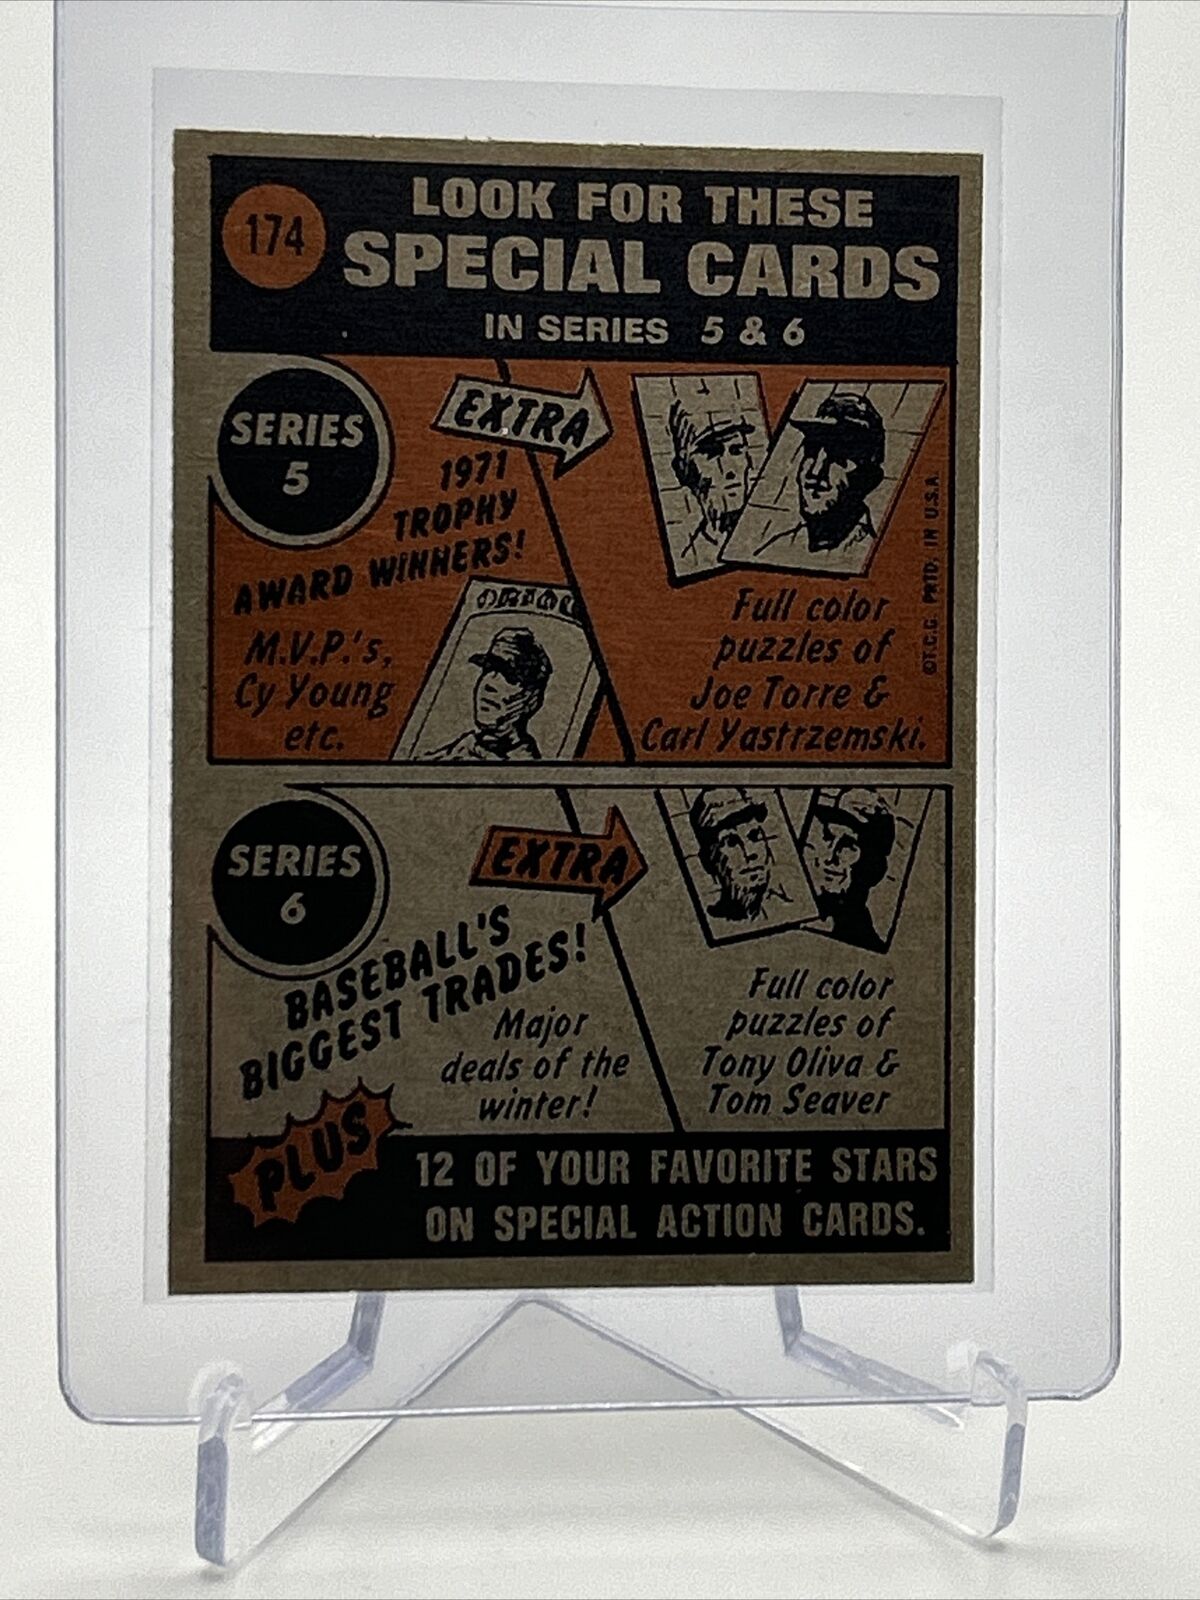 1972 Topps Clay Kirby Baseball Card #174 VG Quality FREE SHIPPING